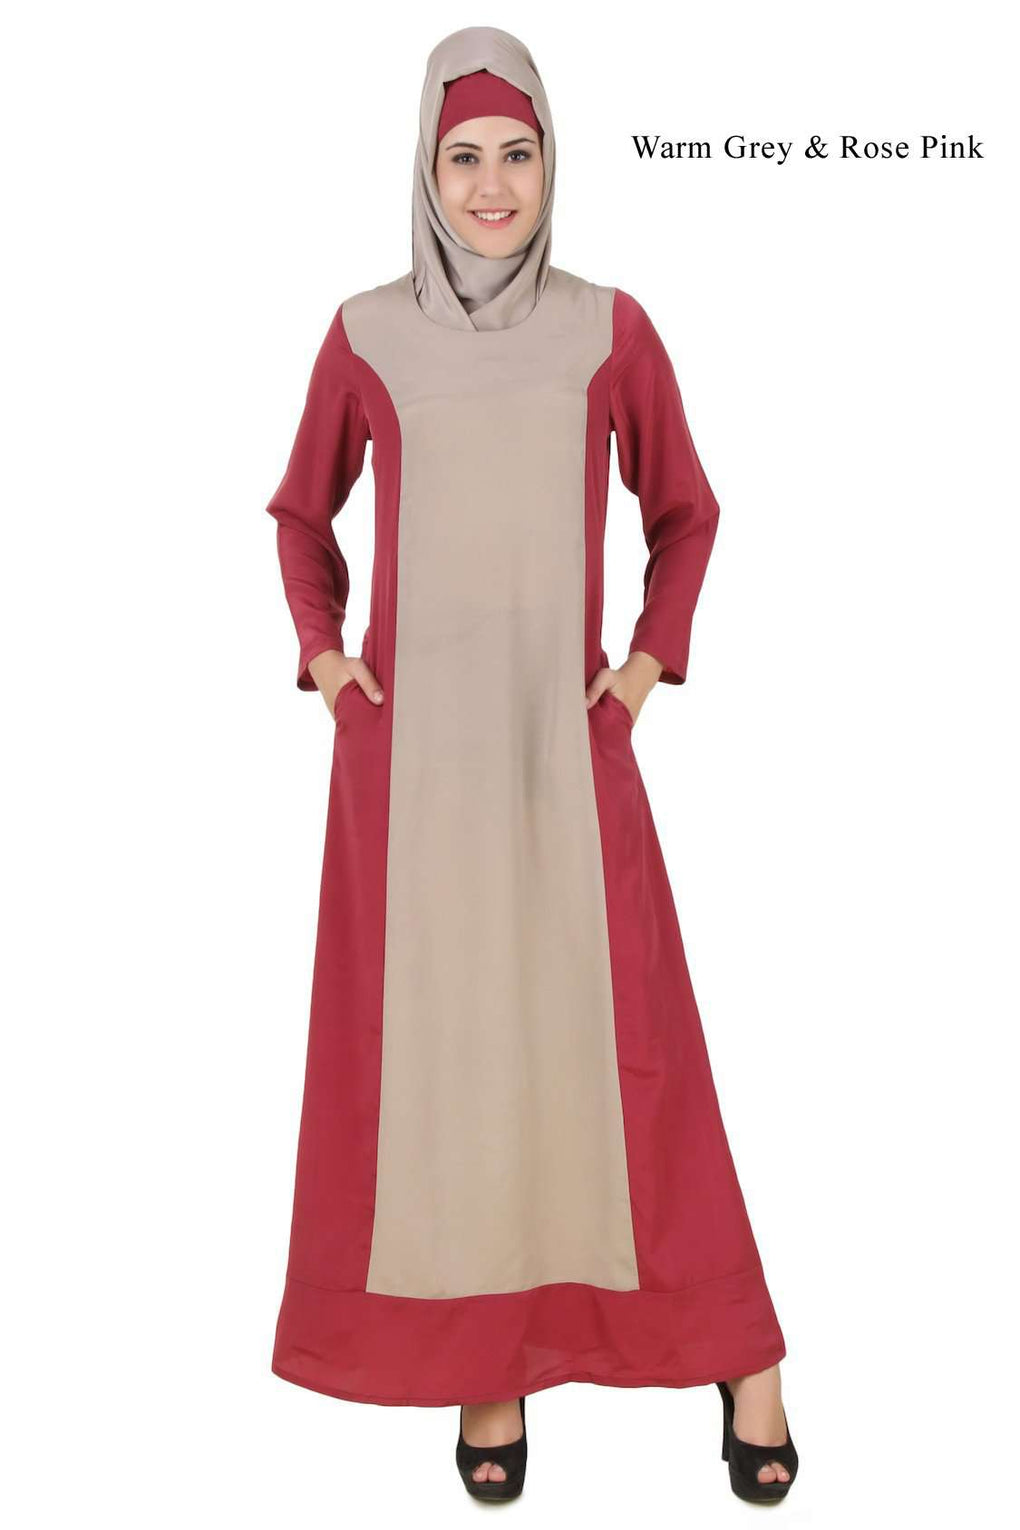 Arshi Slim Look Rose Pink & Warm Grey Abaya Front